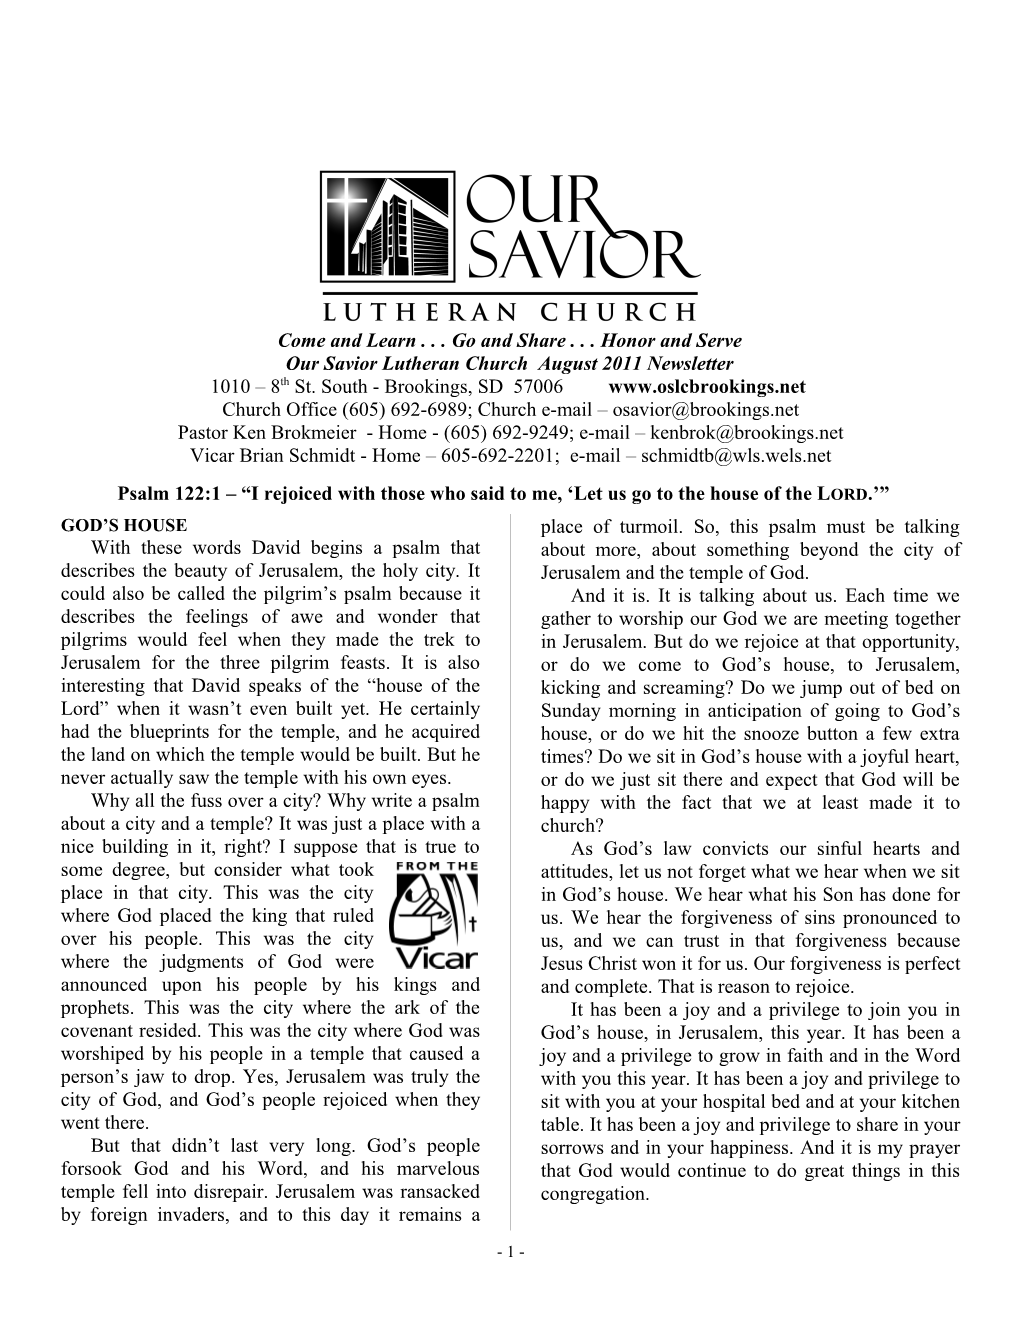 Our Savior Lutheran Church October 2000 Newsletter